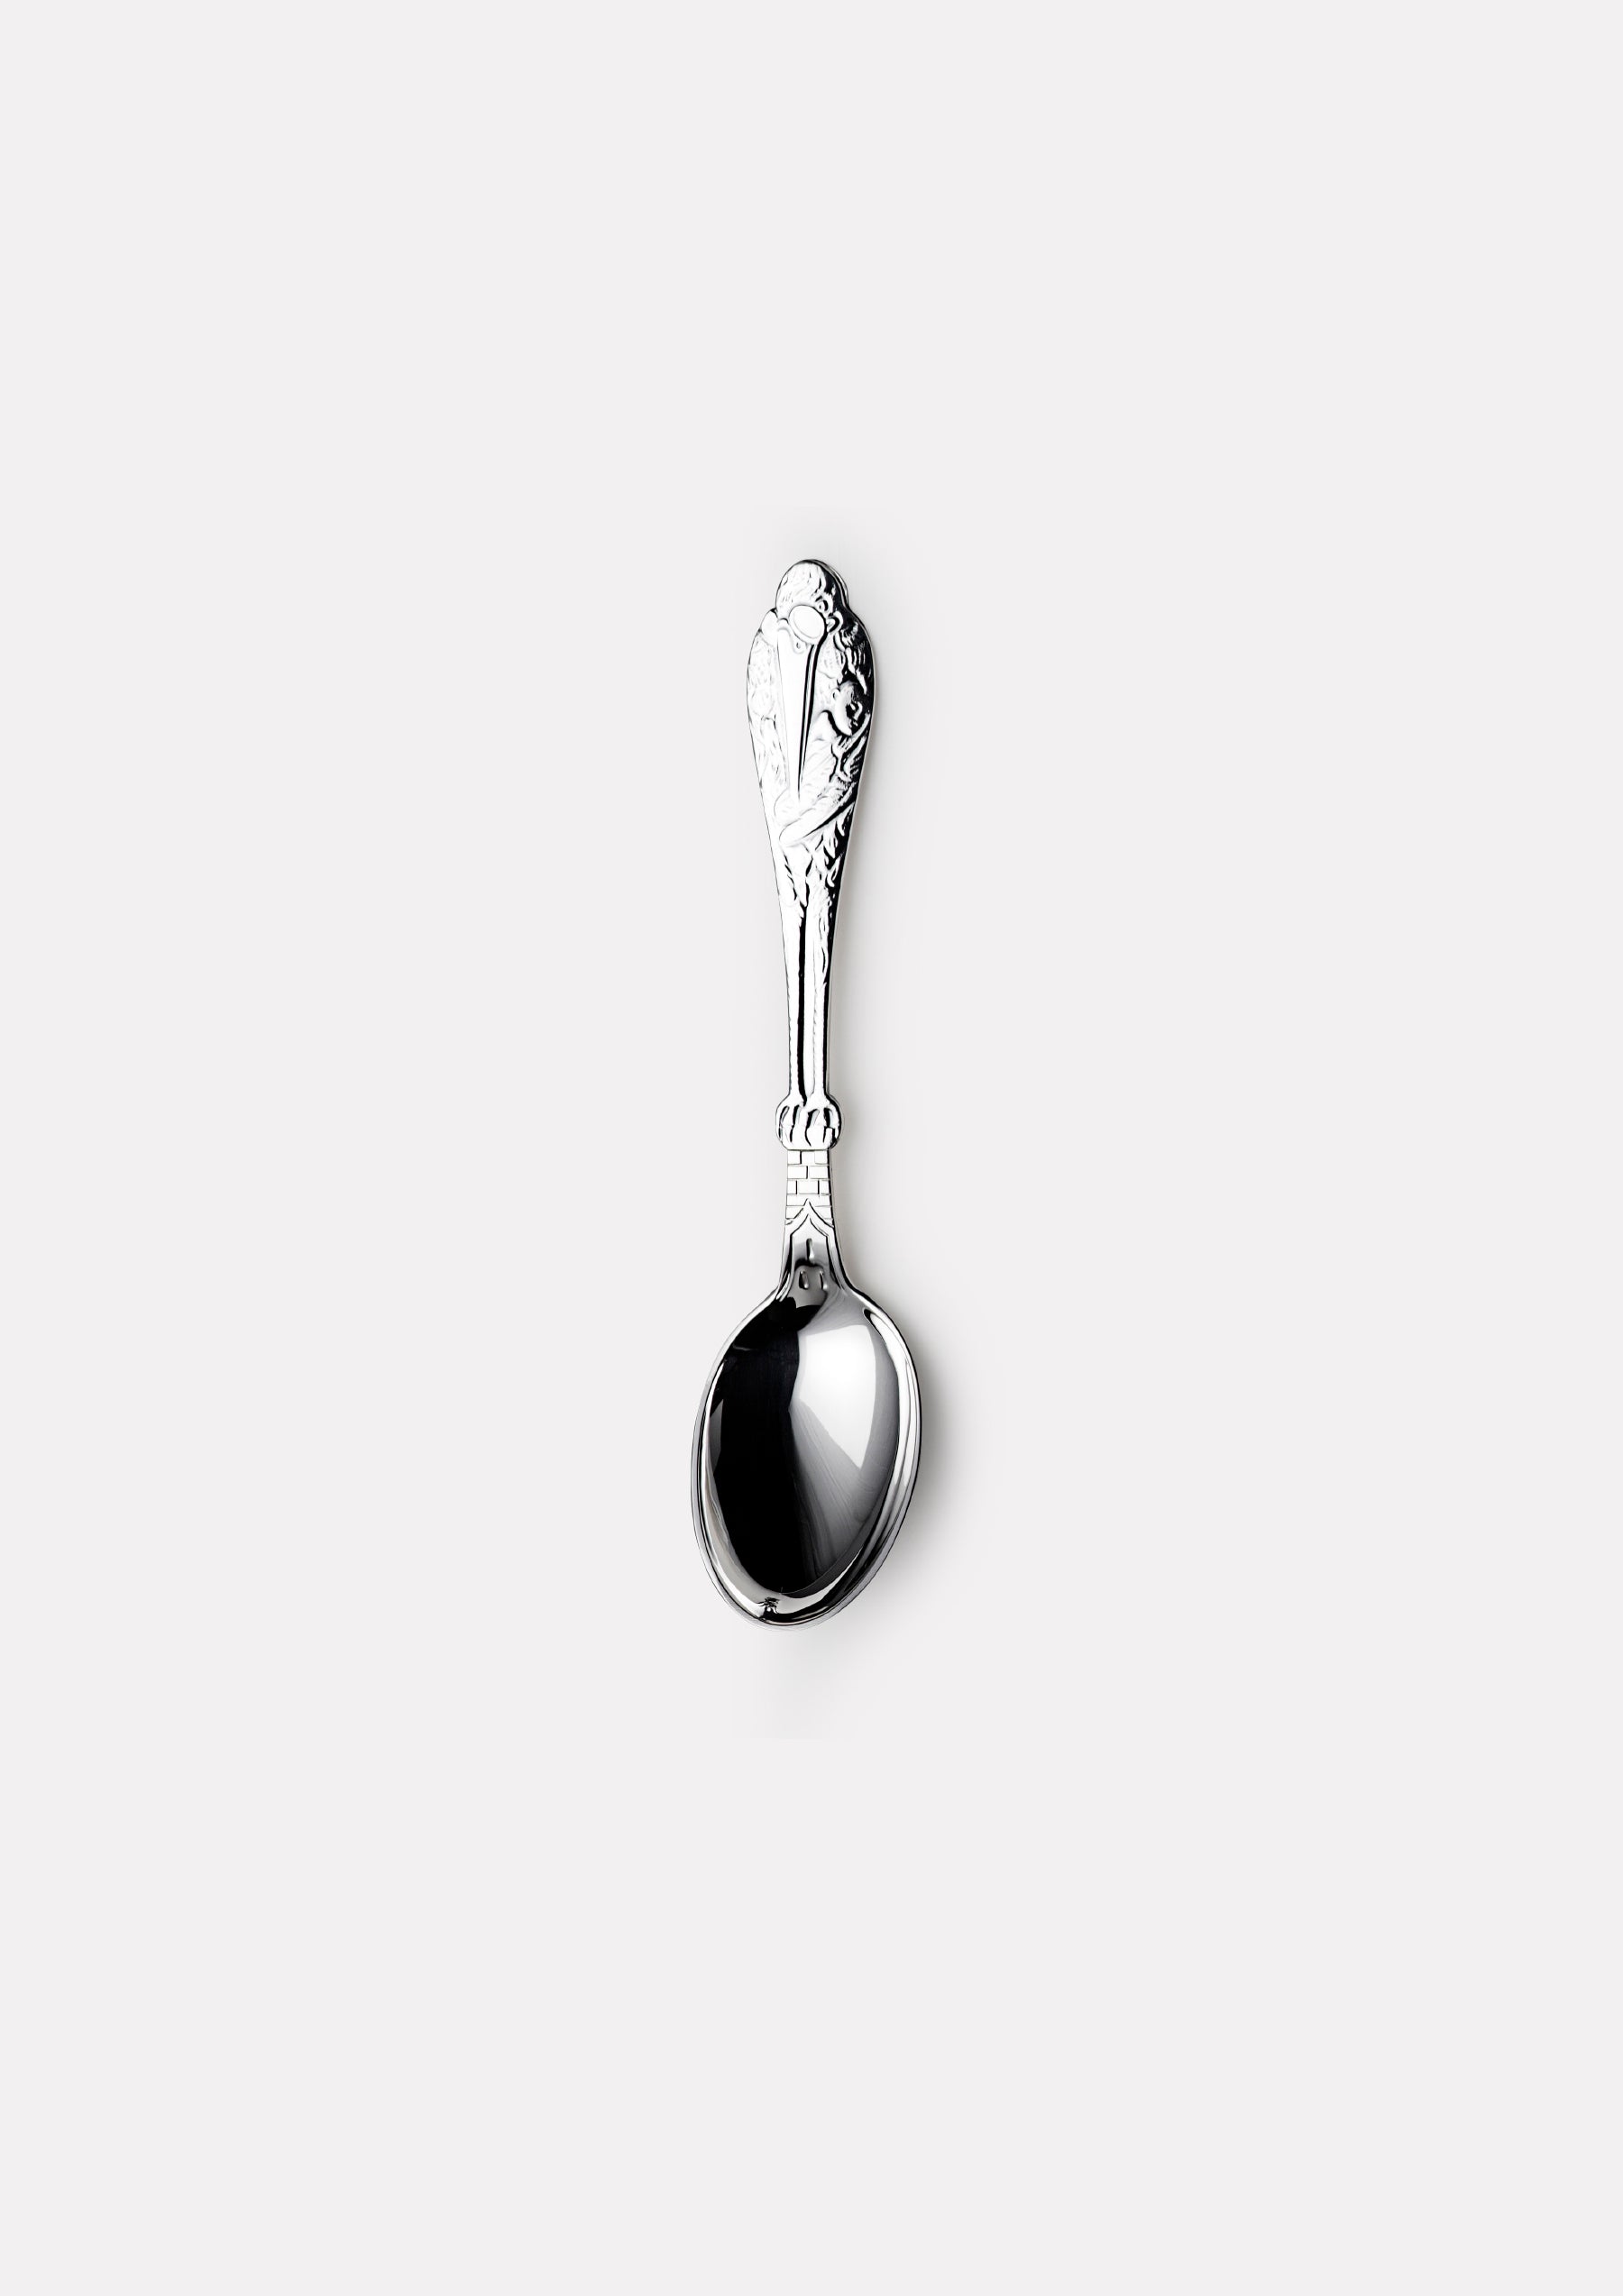 Stork baby spoon